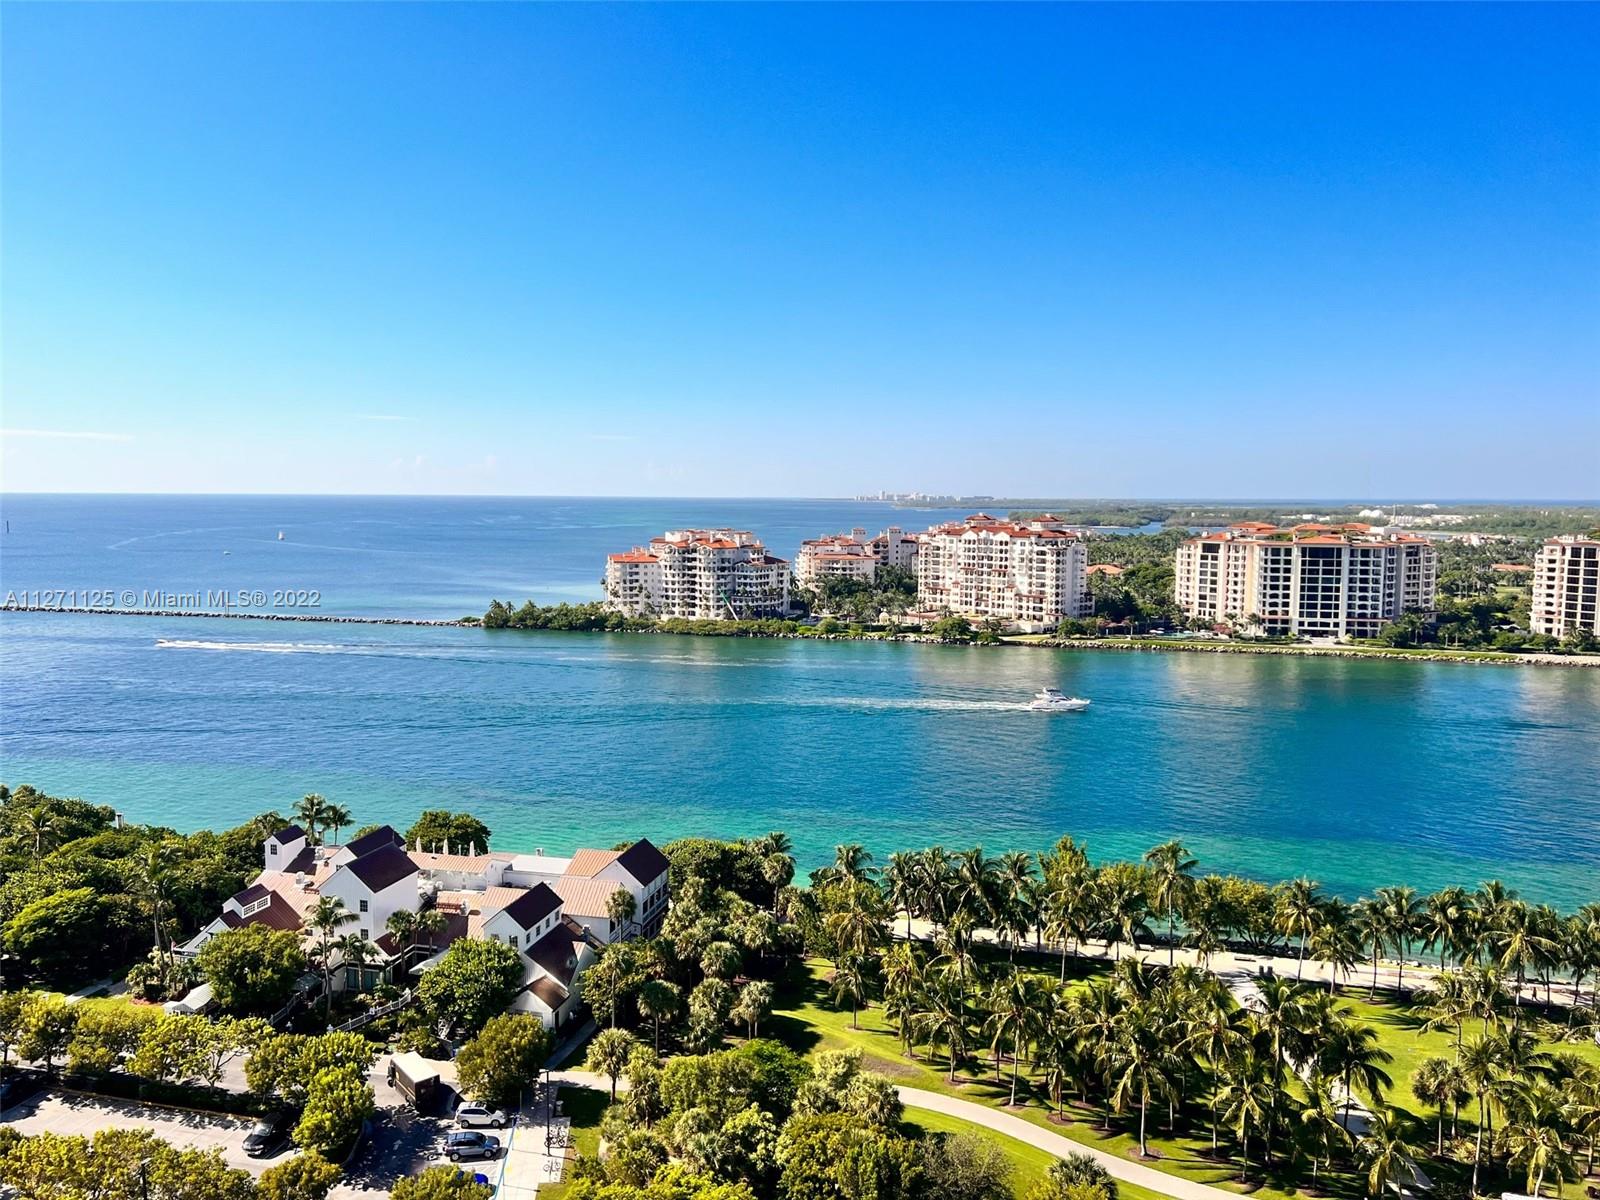 Property for Sale at 400 S Pointe Dr 2105, Miami Beach, Miami-Dade County, Florida - Bedrooms: 2 
Bathrooms: 2  - $1,539,000